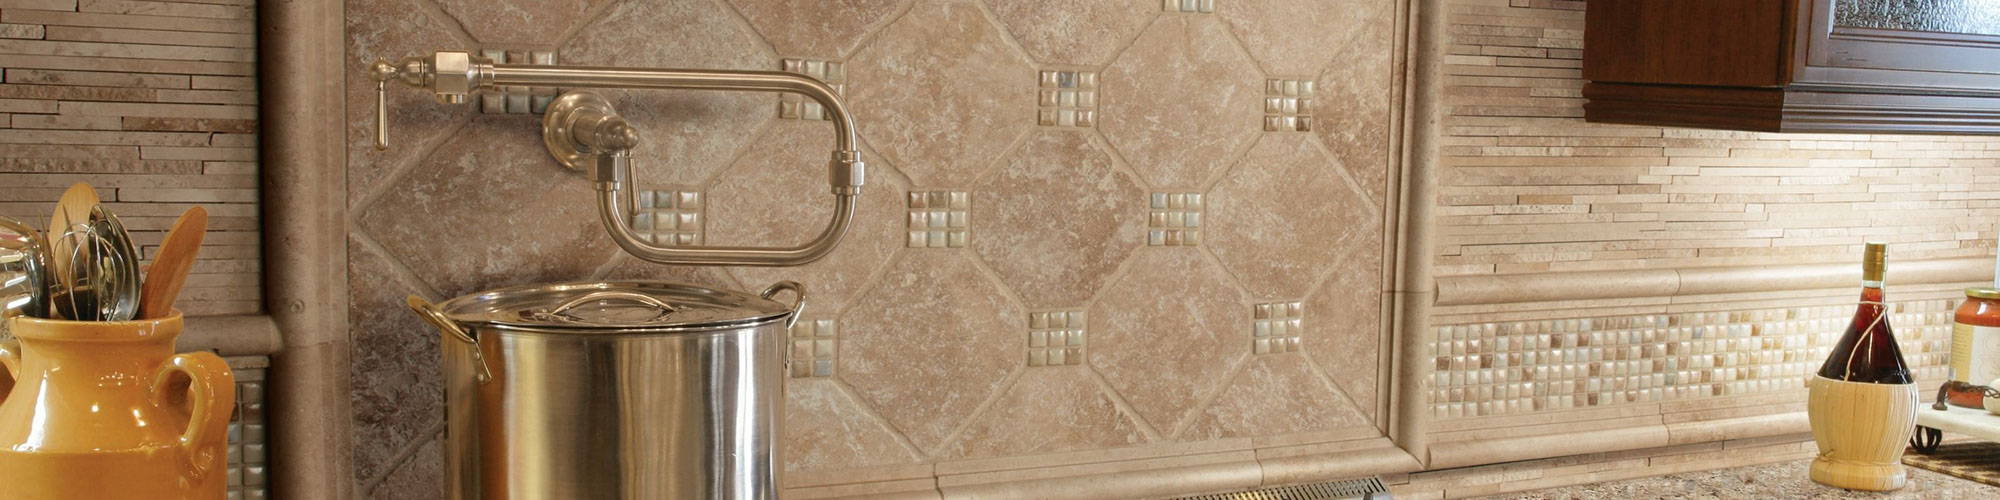 Kitchen backsplash with tan travertine decorative backsplash with mosaic accents, potholder, and brown & beige granite countertop.